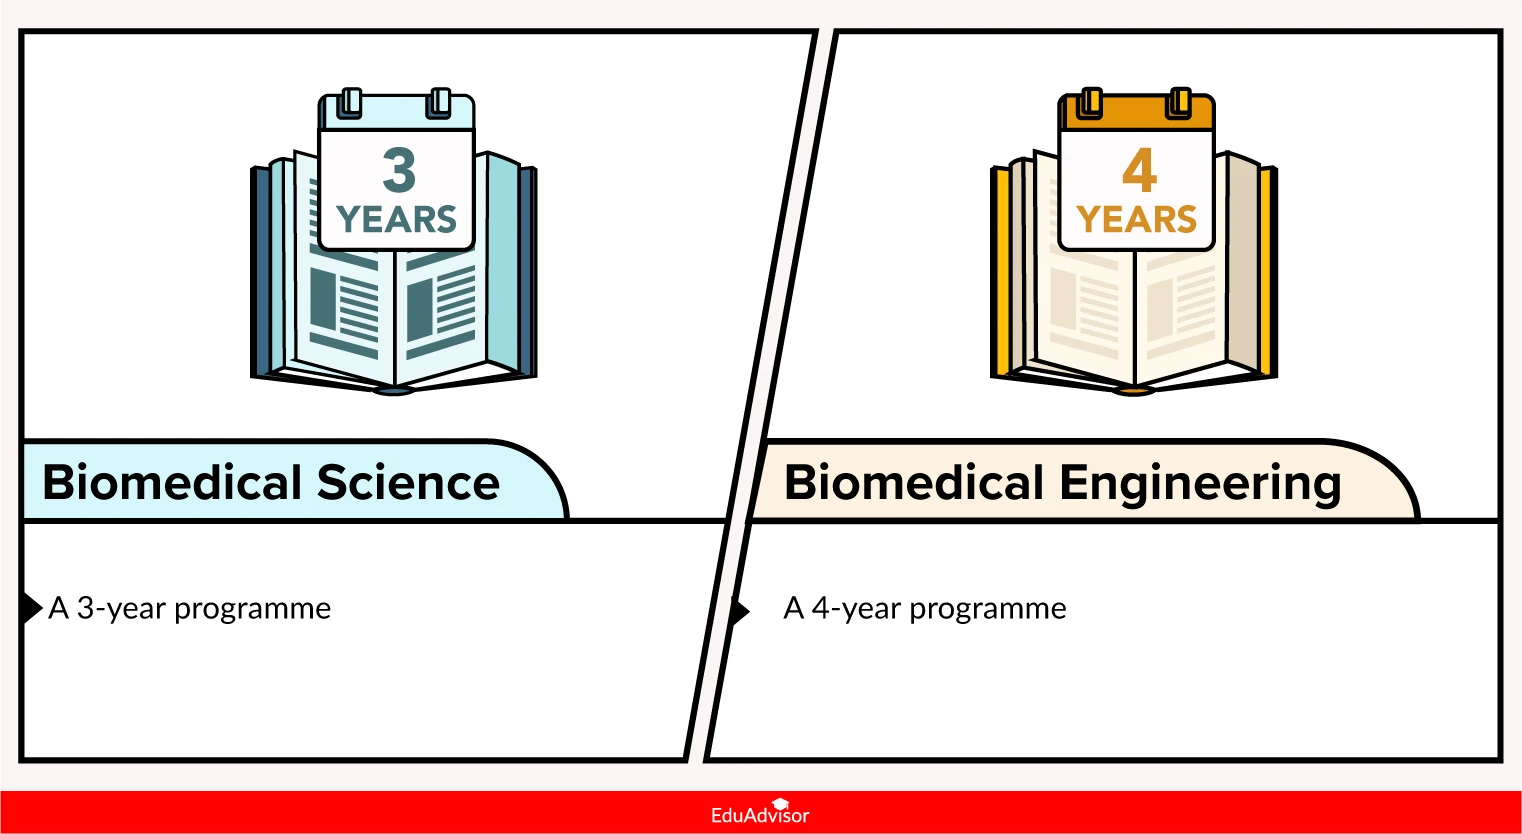 biomed-science-vs-biomed-engineering-duration